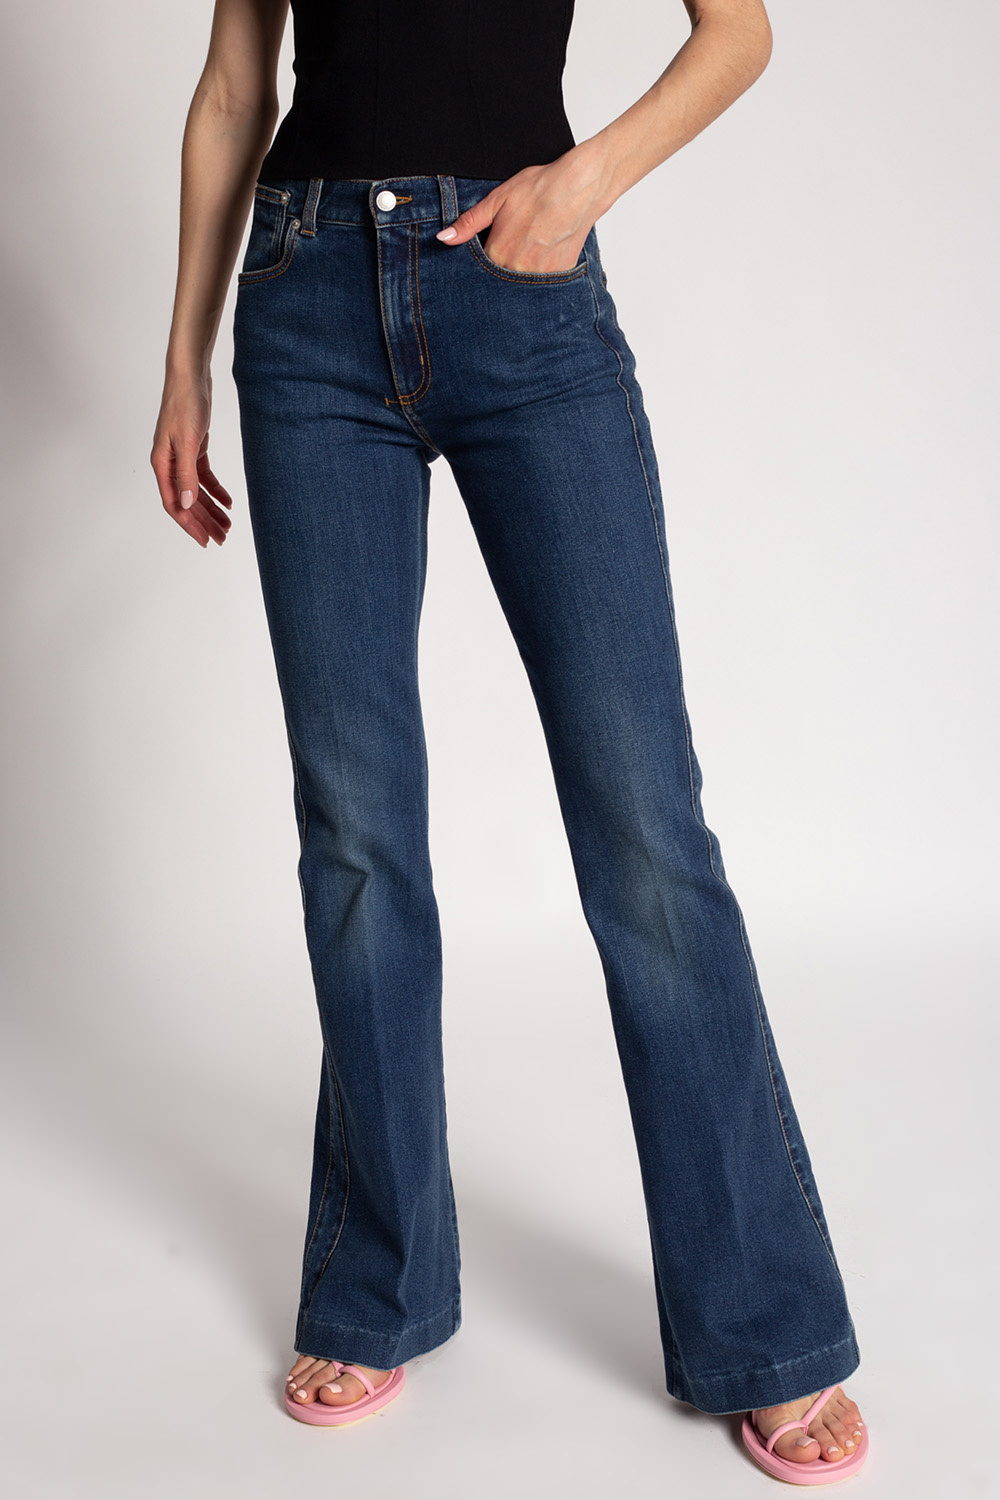 Women's Clothing | IetpShops | Alexander McQueen graphic floral print shirt  | Alexander McQueen Flared jeans